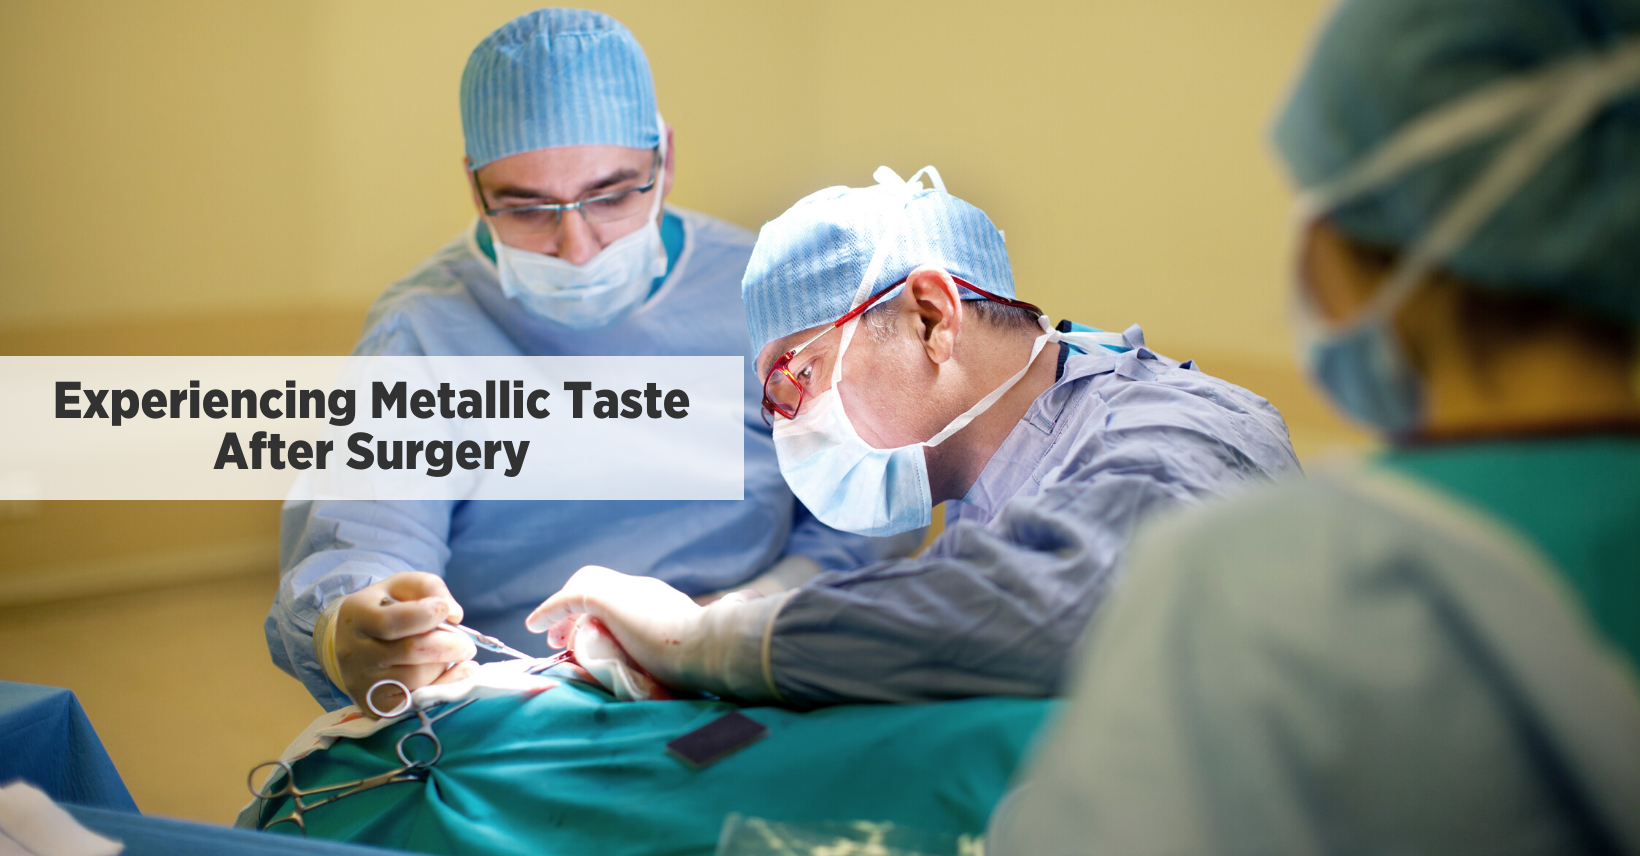 Experiencing Metallic Taste After Surgery - MetaQil